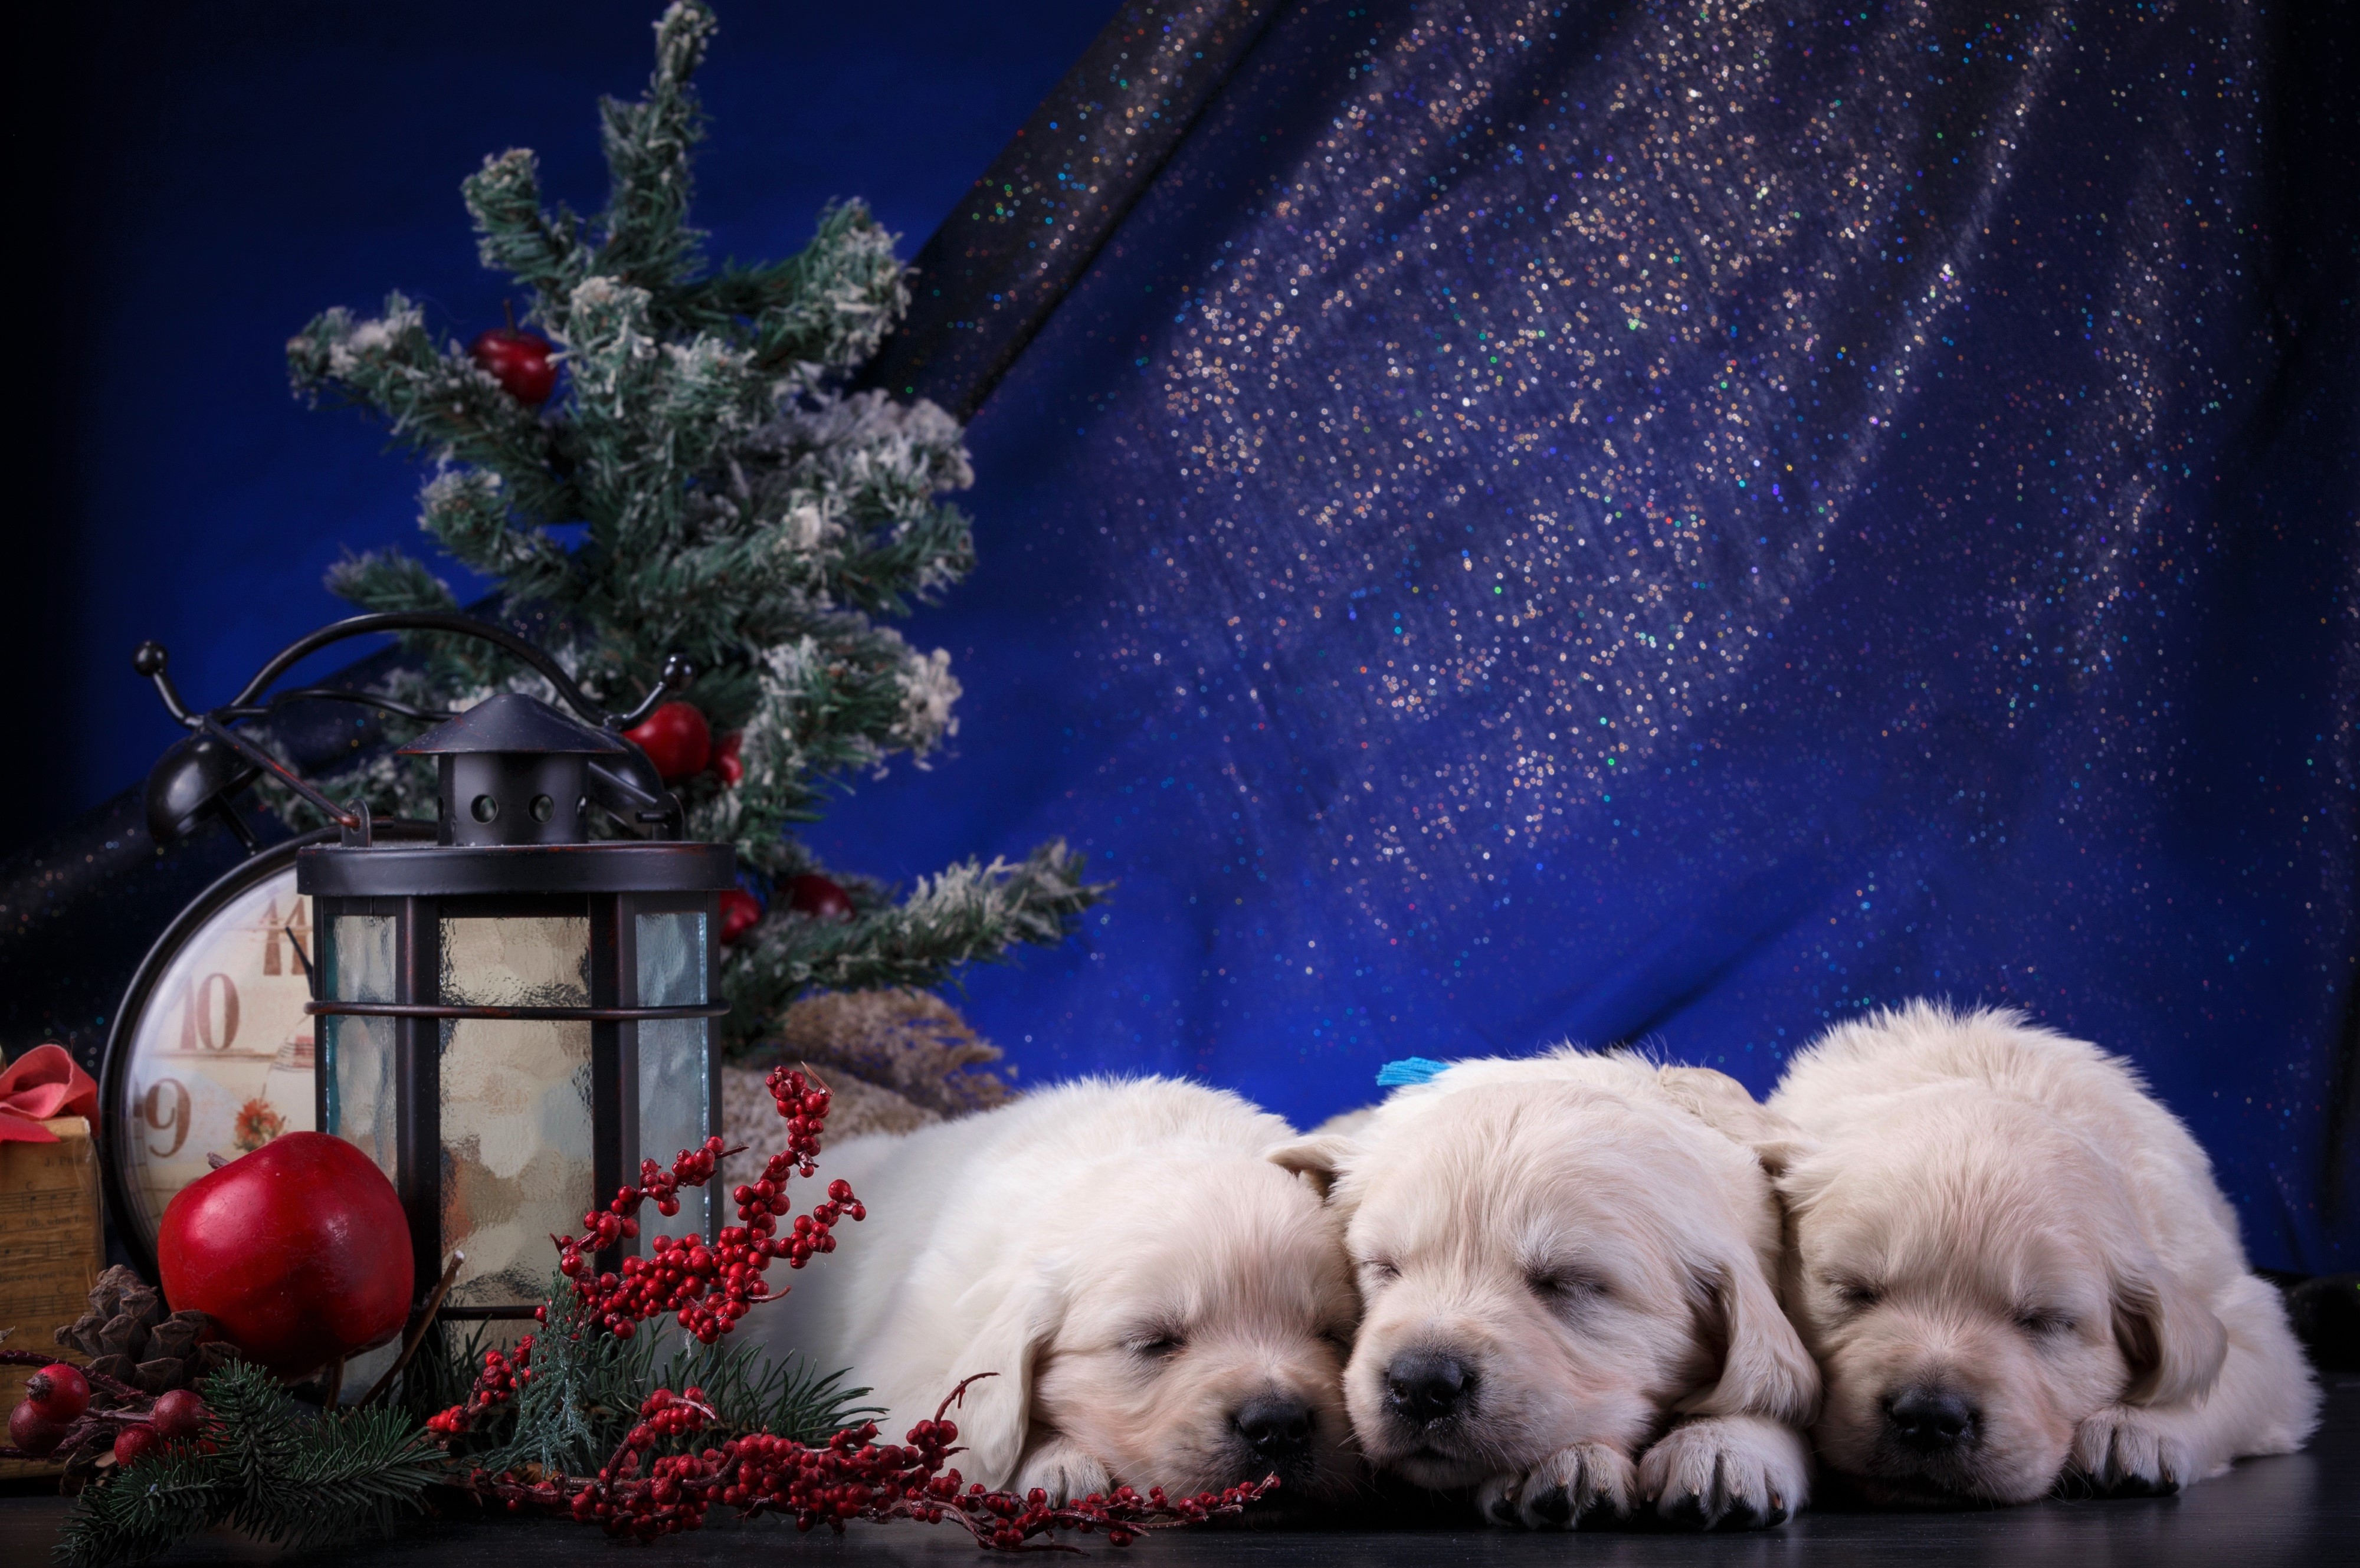 Sleeping Puppies at Christmastime